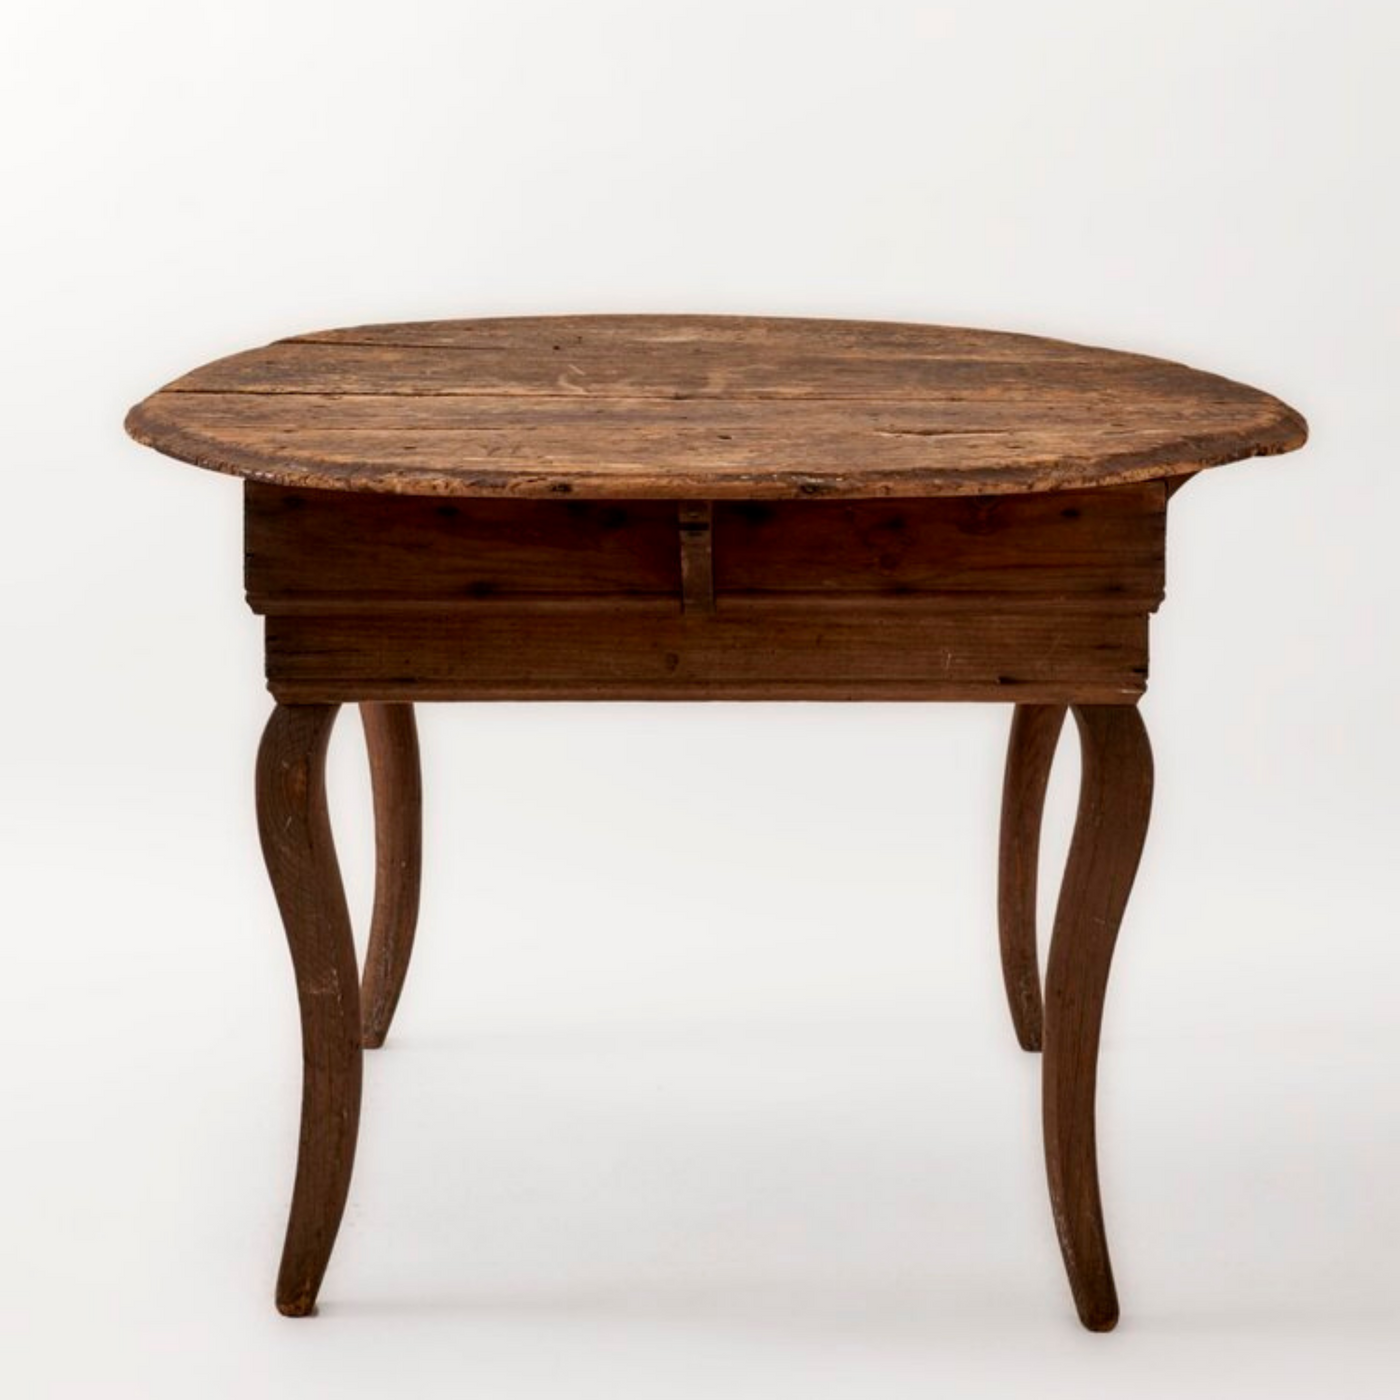 Rustic Round Table c. 1800's